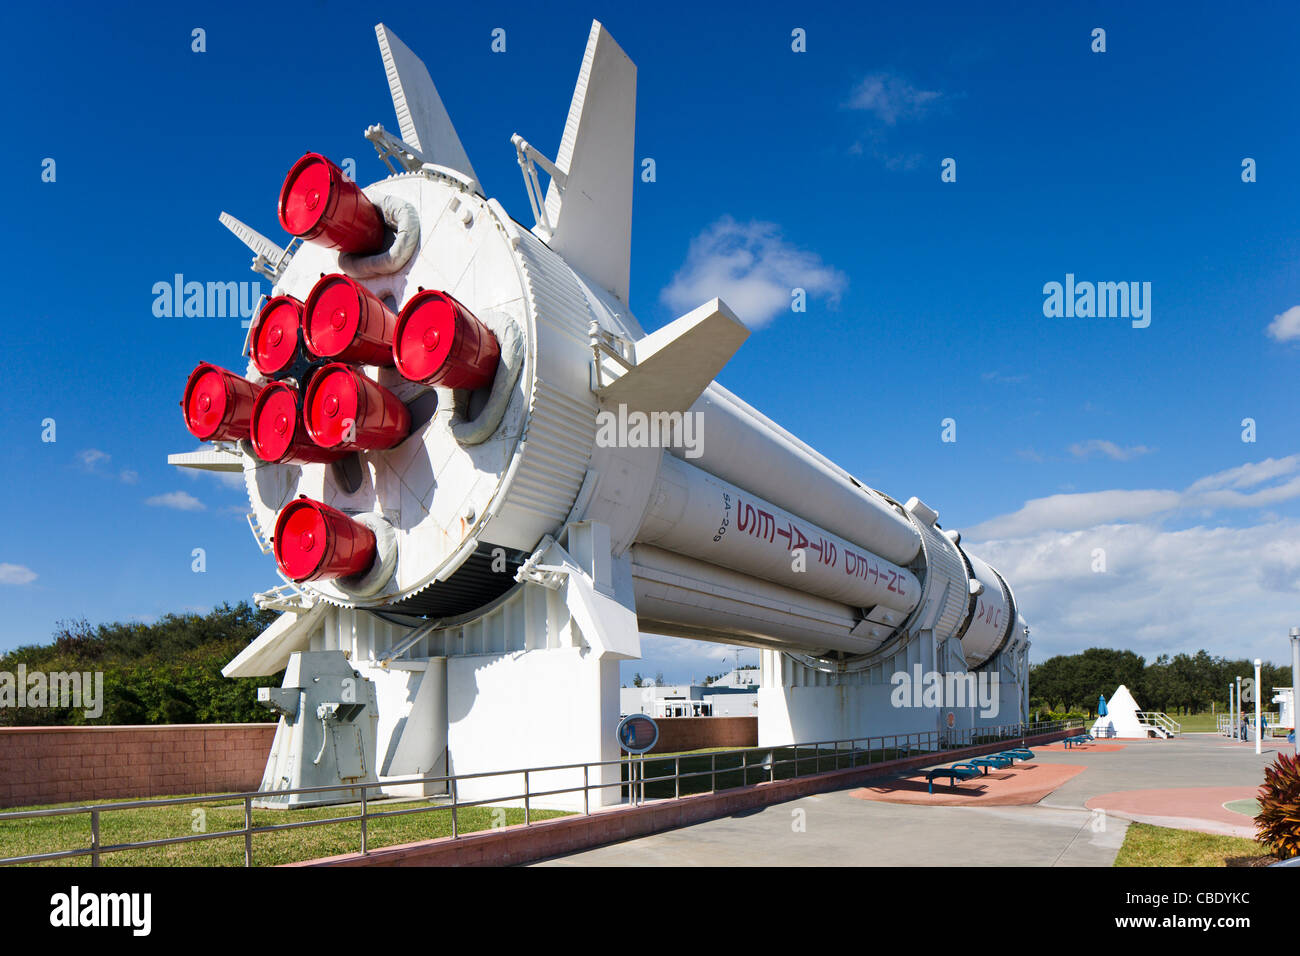 Cohete Saturno IB, el cohete Jardín, Kennedy Space Center Visitor Complex, Merritt Island, Florida, EE.UU. Foto de stock